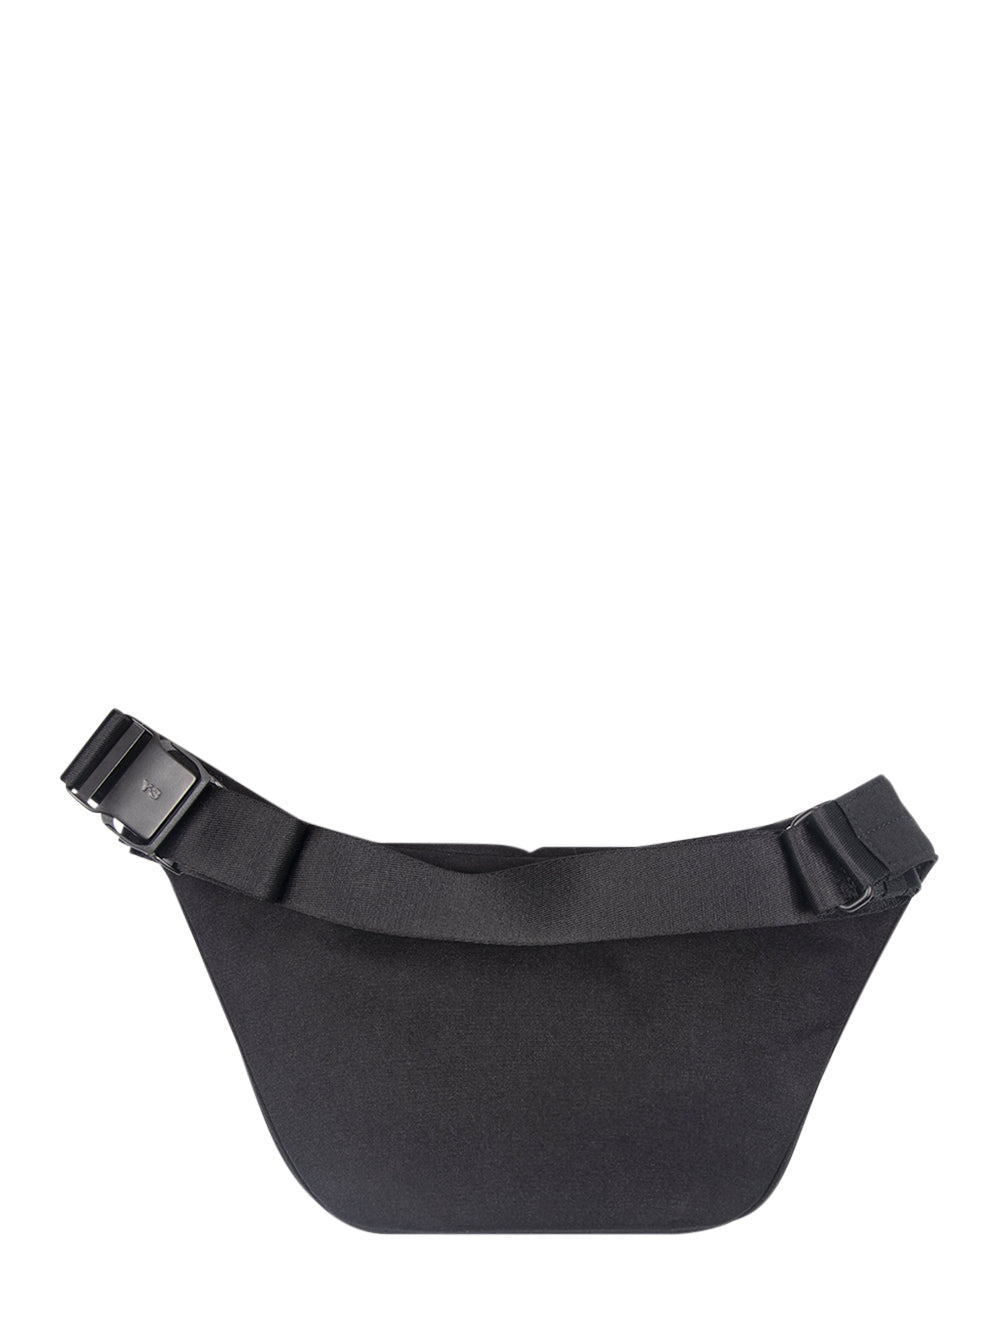 Morphed Crossbody Bag (Black)